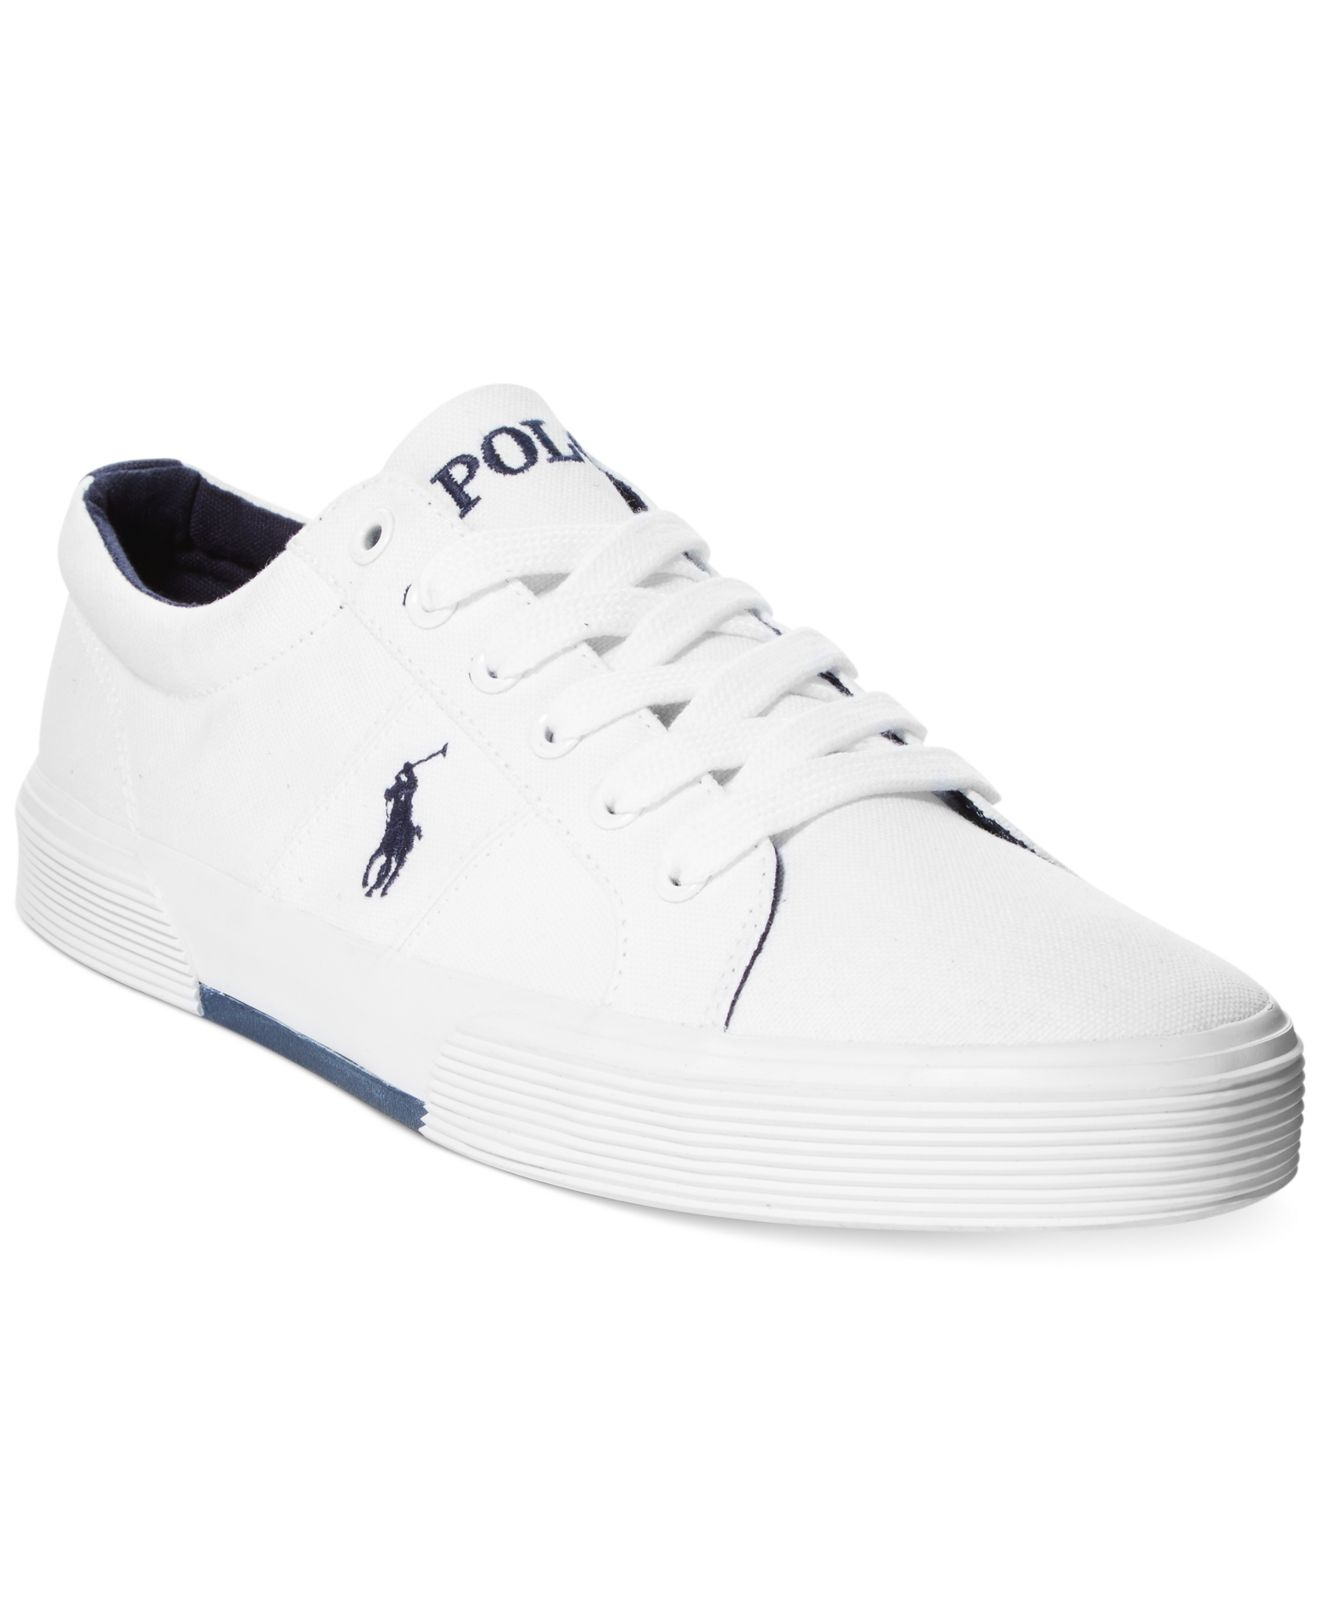 Polo Ralph Lauren Felix Canvas Sneakers in White for Men - Lyst